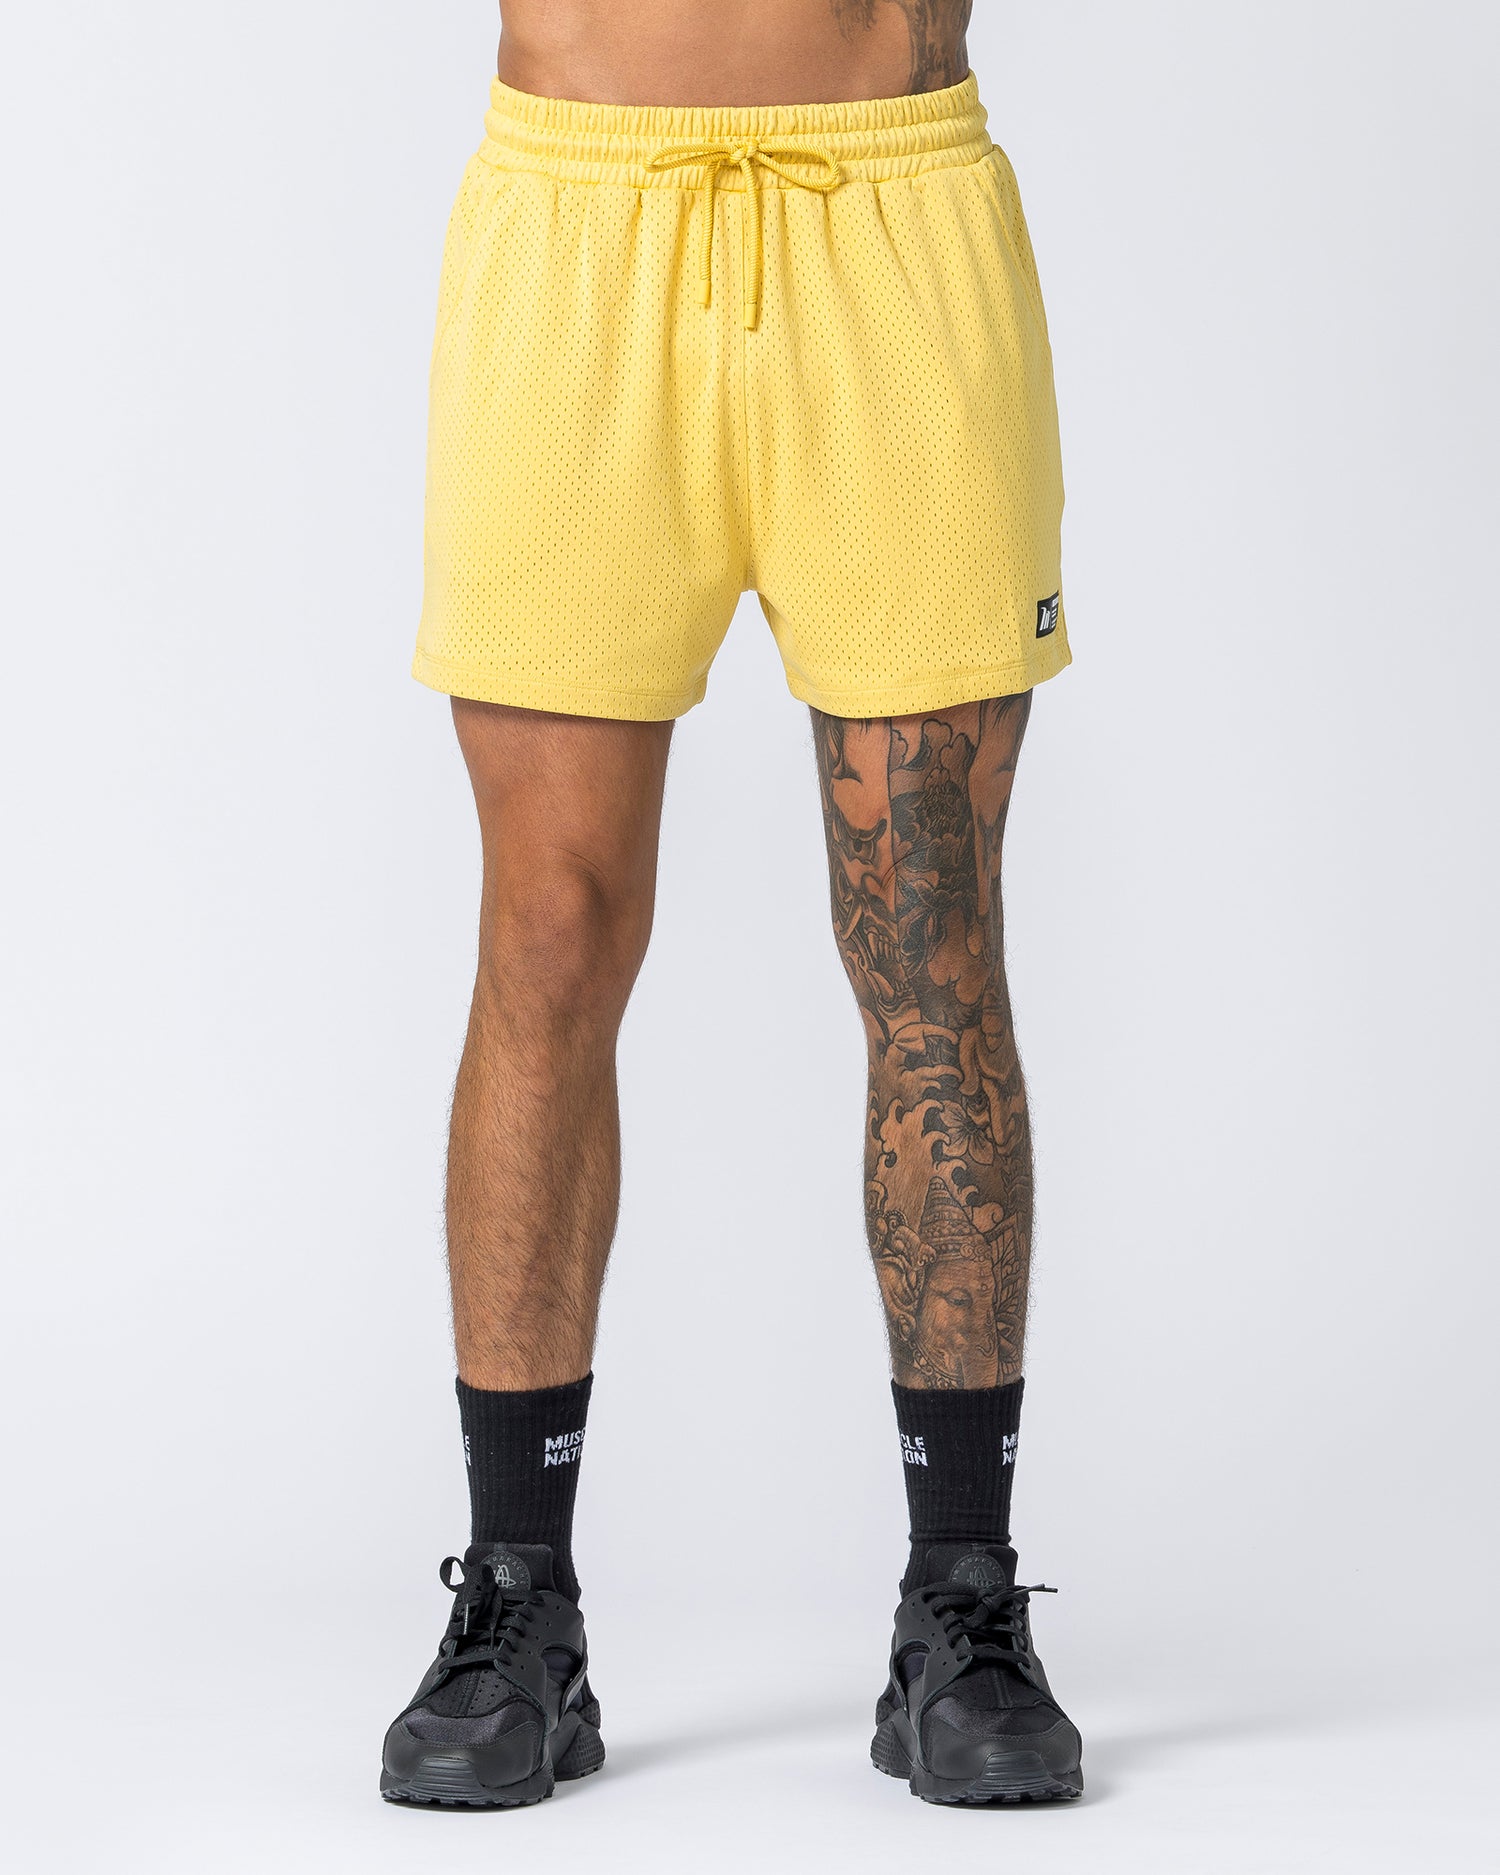 Lay Up 3.5" Shorts - Pineapple